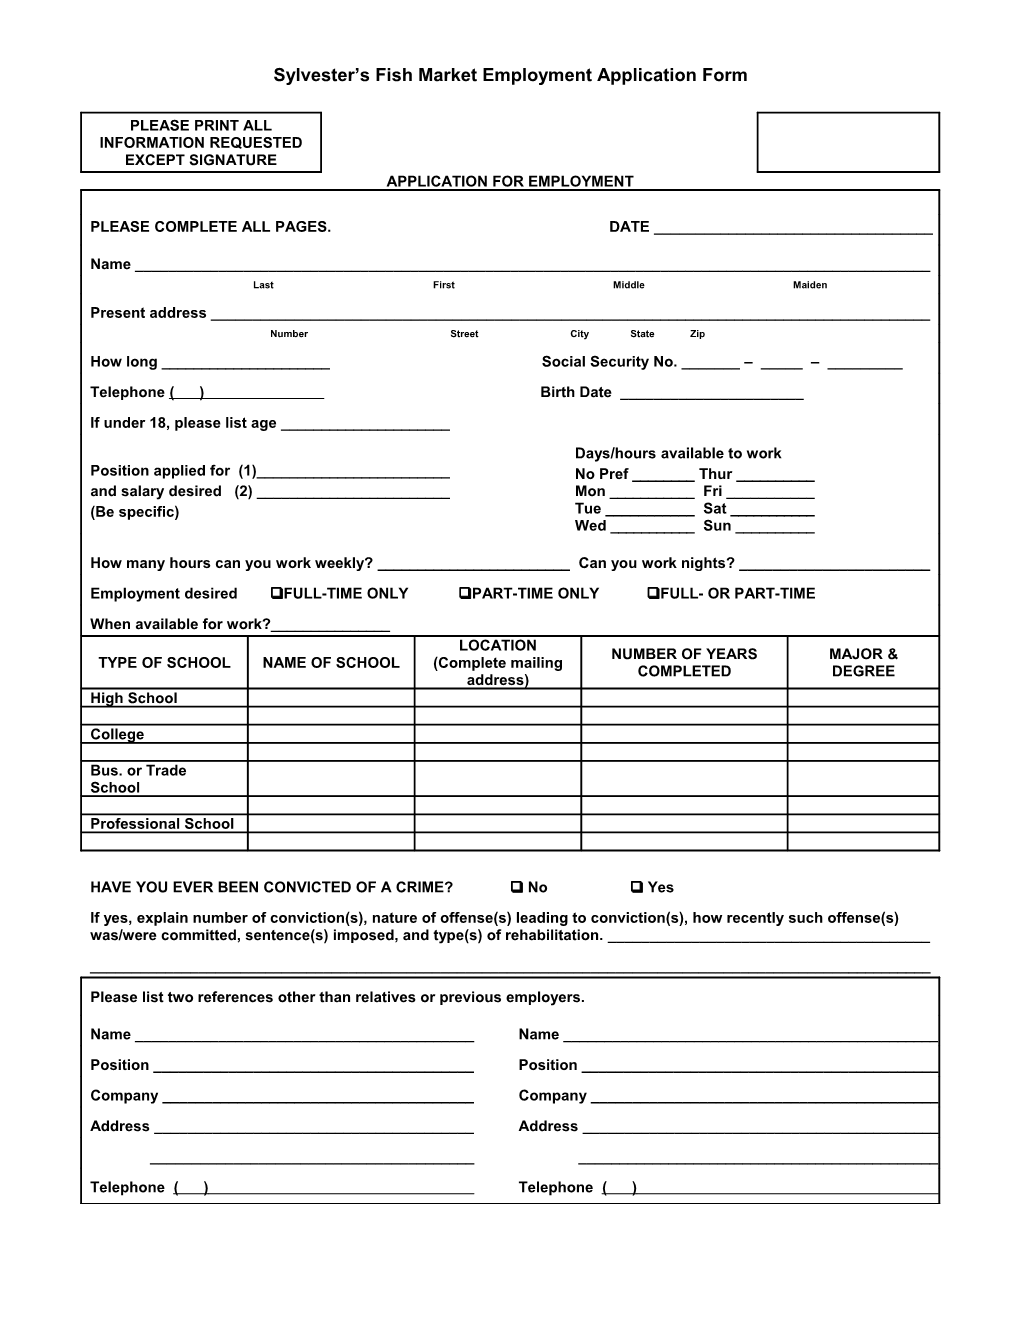 Sylvester S Fish Market Employment Application Form